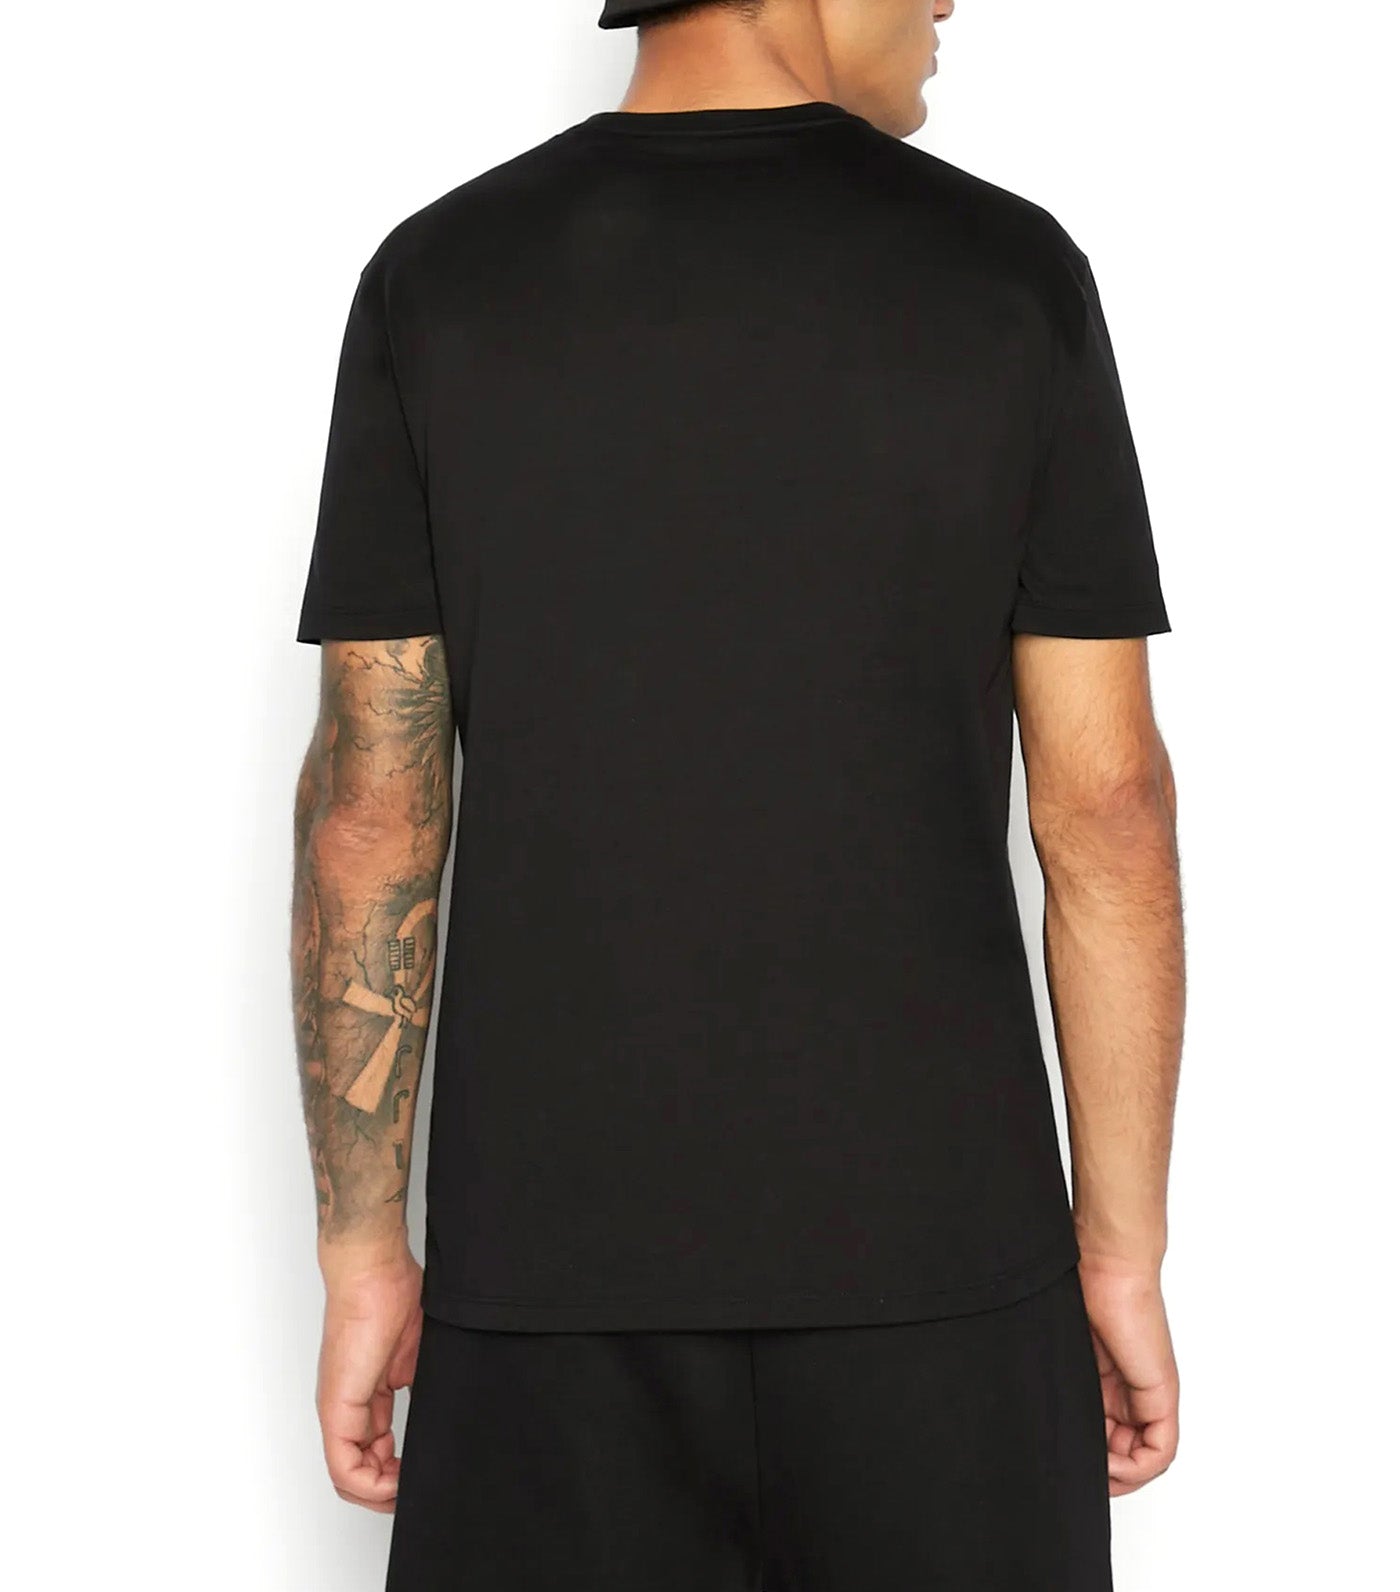 Basics By Armani Organic Jersey Crew Neck T-Shirt Black